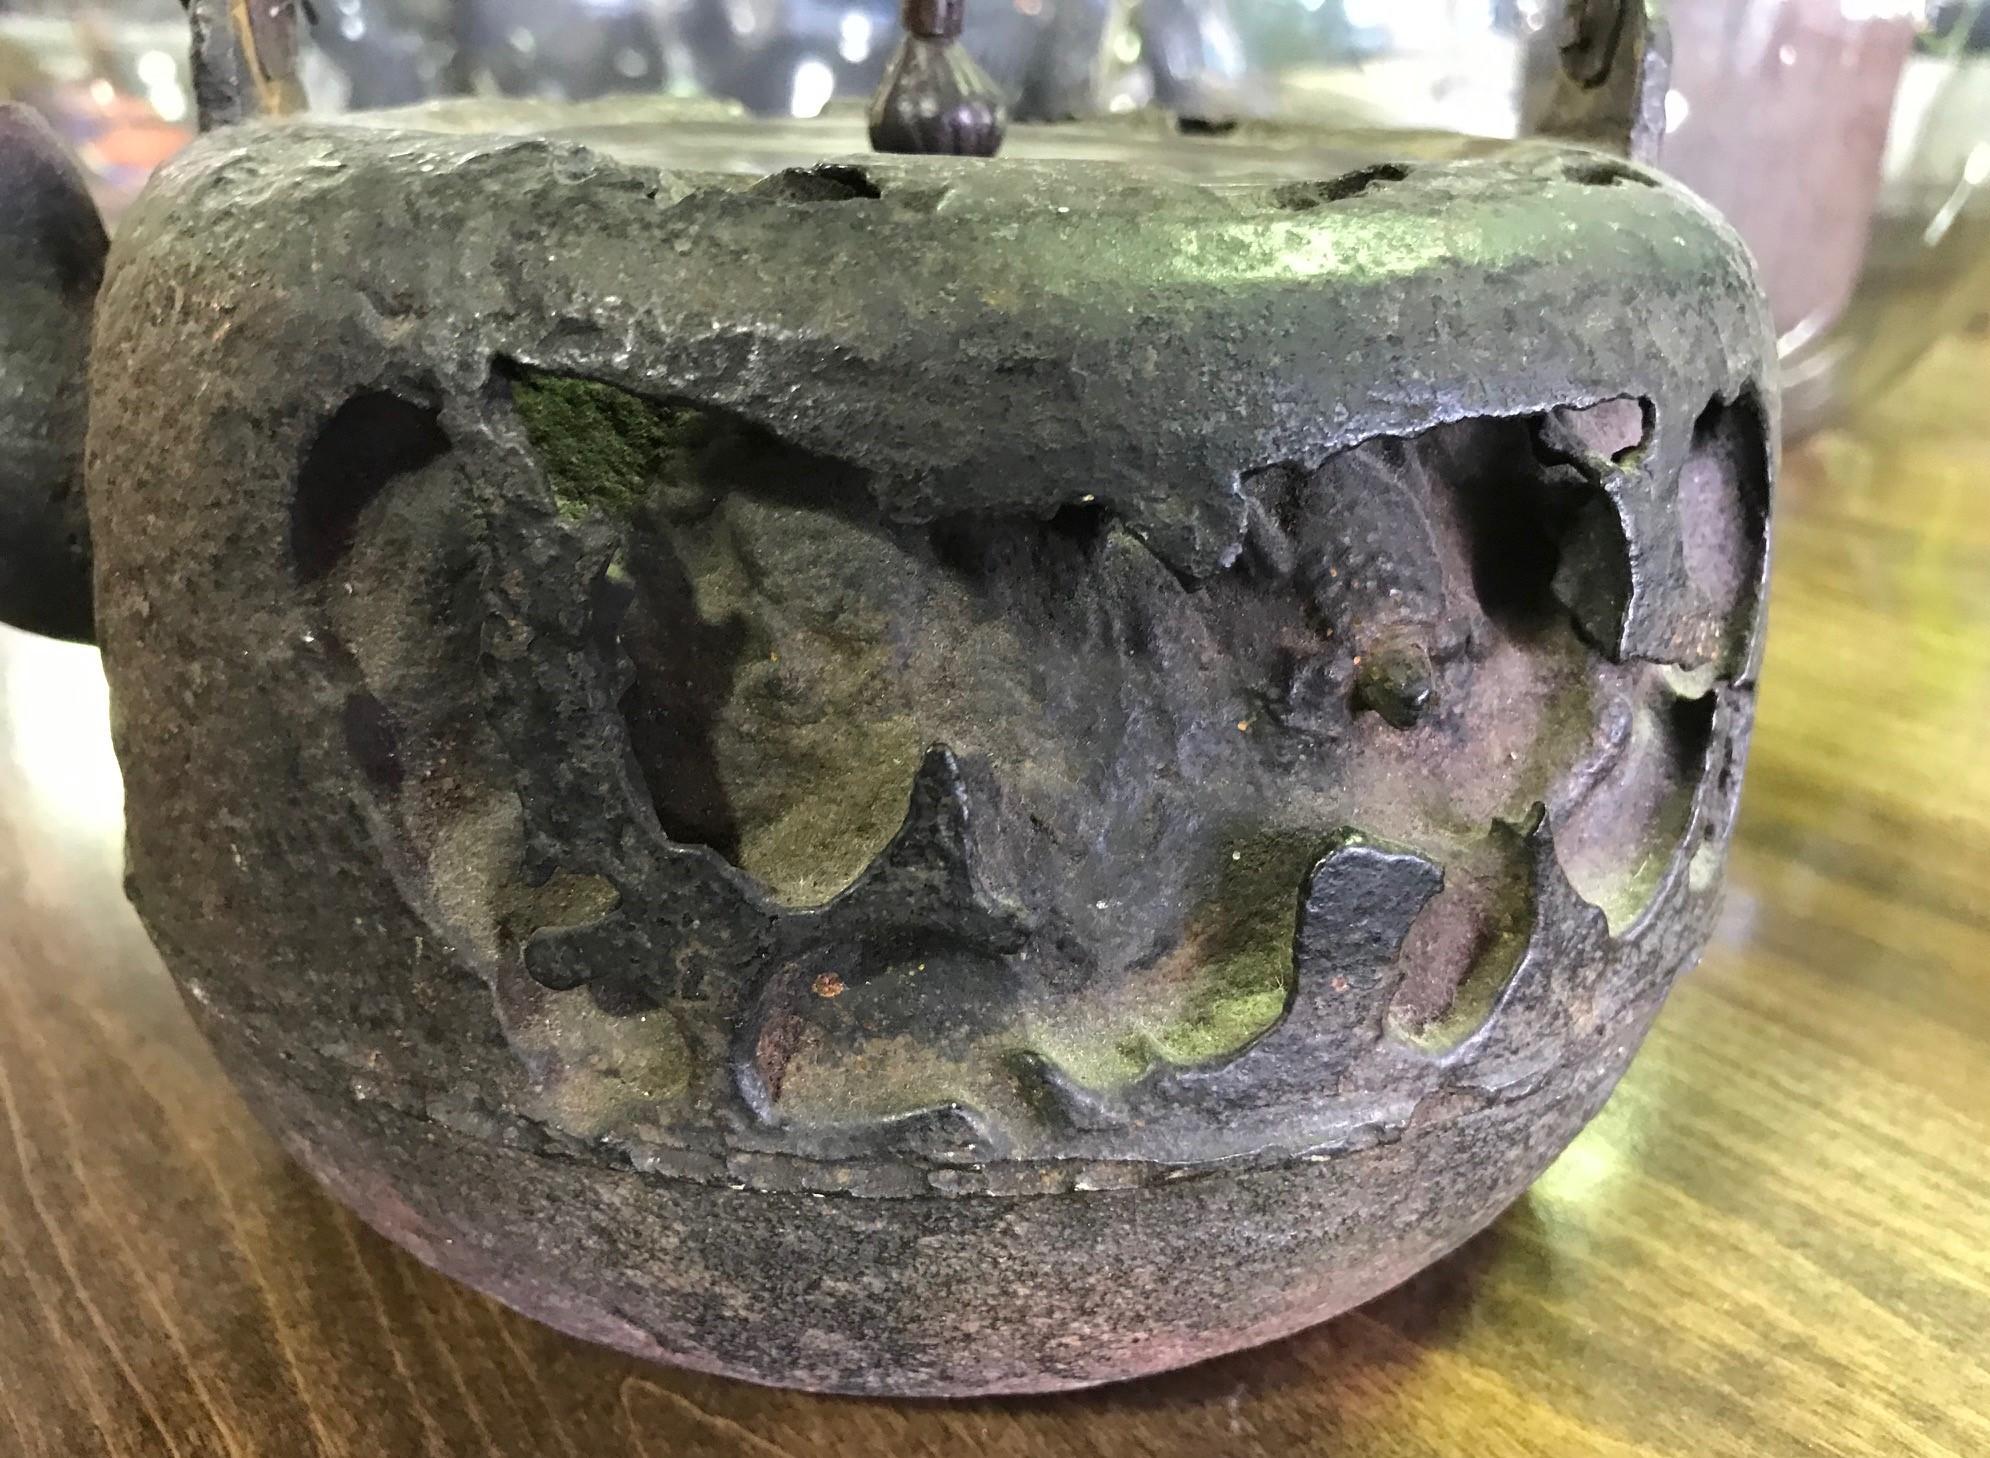 19th Century Japanese Edo Period Iron Tetsubin Tea Pot Kettle with Turtle Motif Decoration